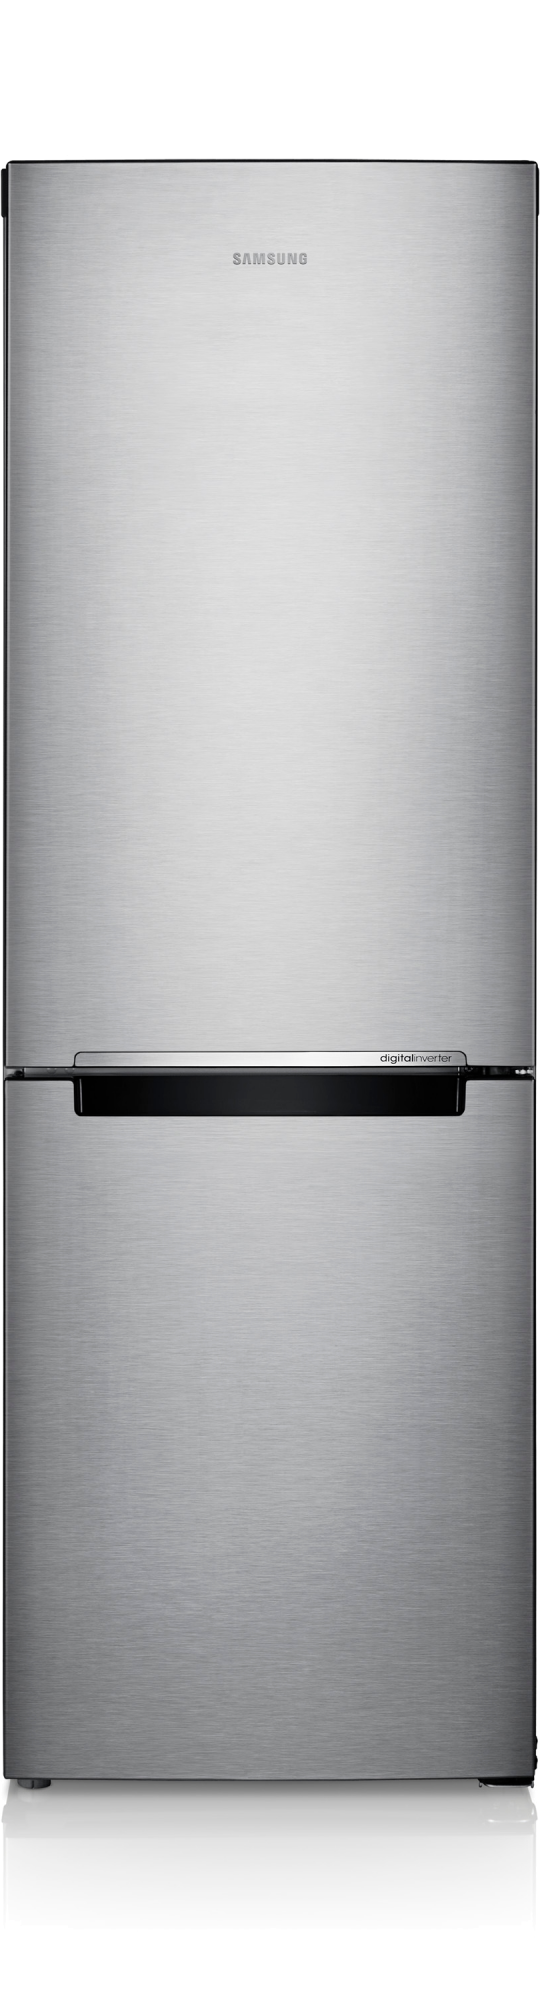 SAMSUNG Rb29 Classic Fridge Freezer With Digital Inverter Technology 290 L Silver